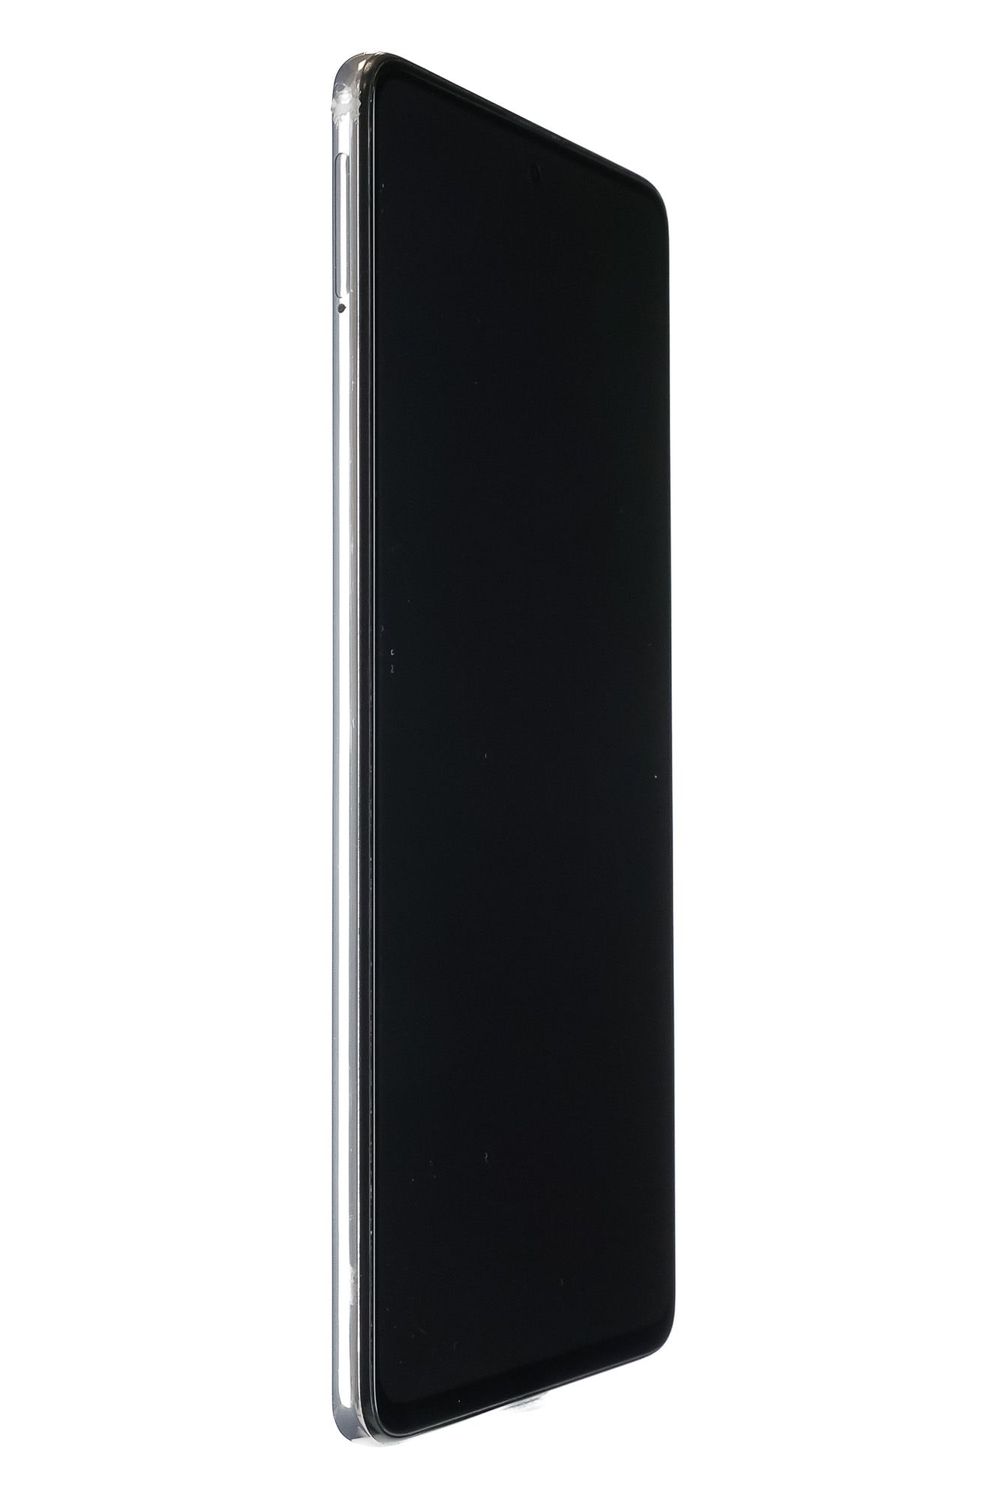 Мобилен телефон Samsung Galaxy A51 Dual Sim, White, 128 GB, Bun